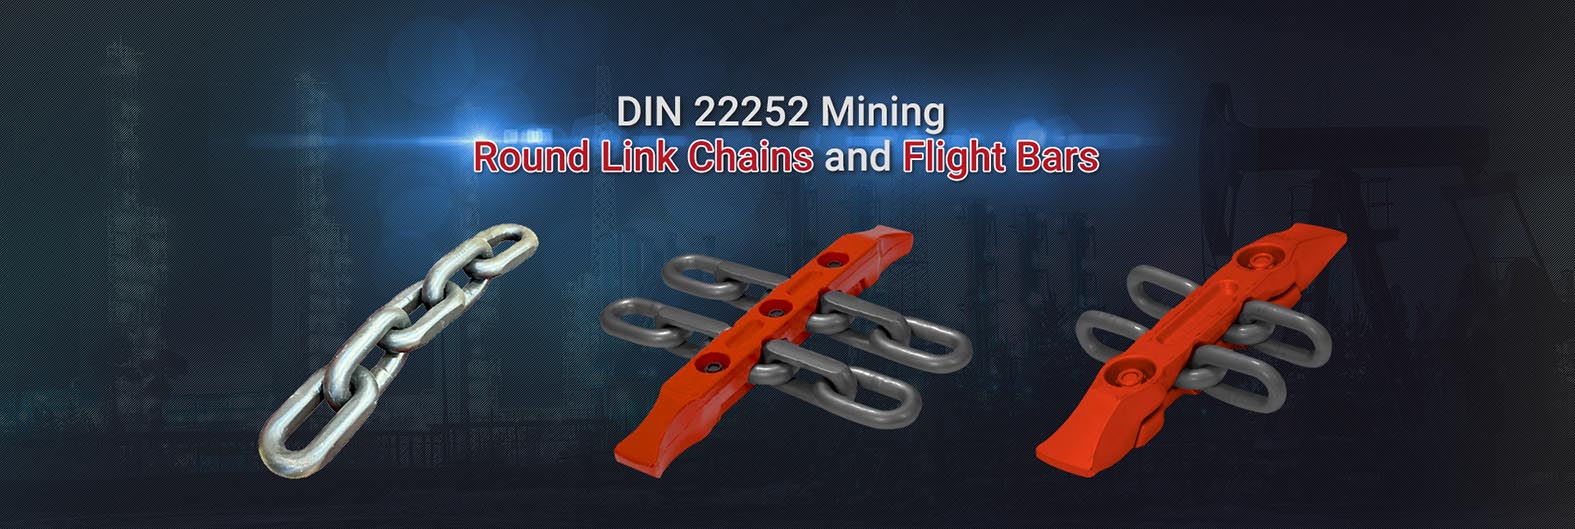 I-SCIC Mining Chain